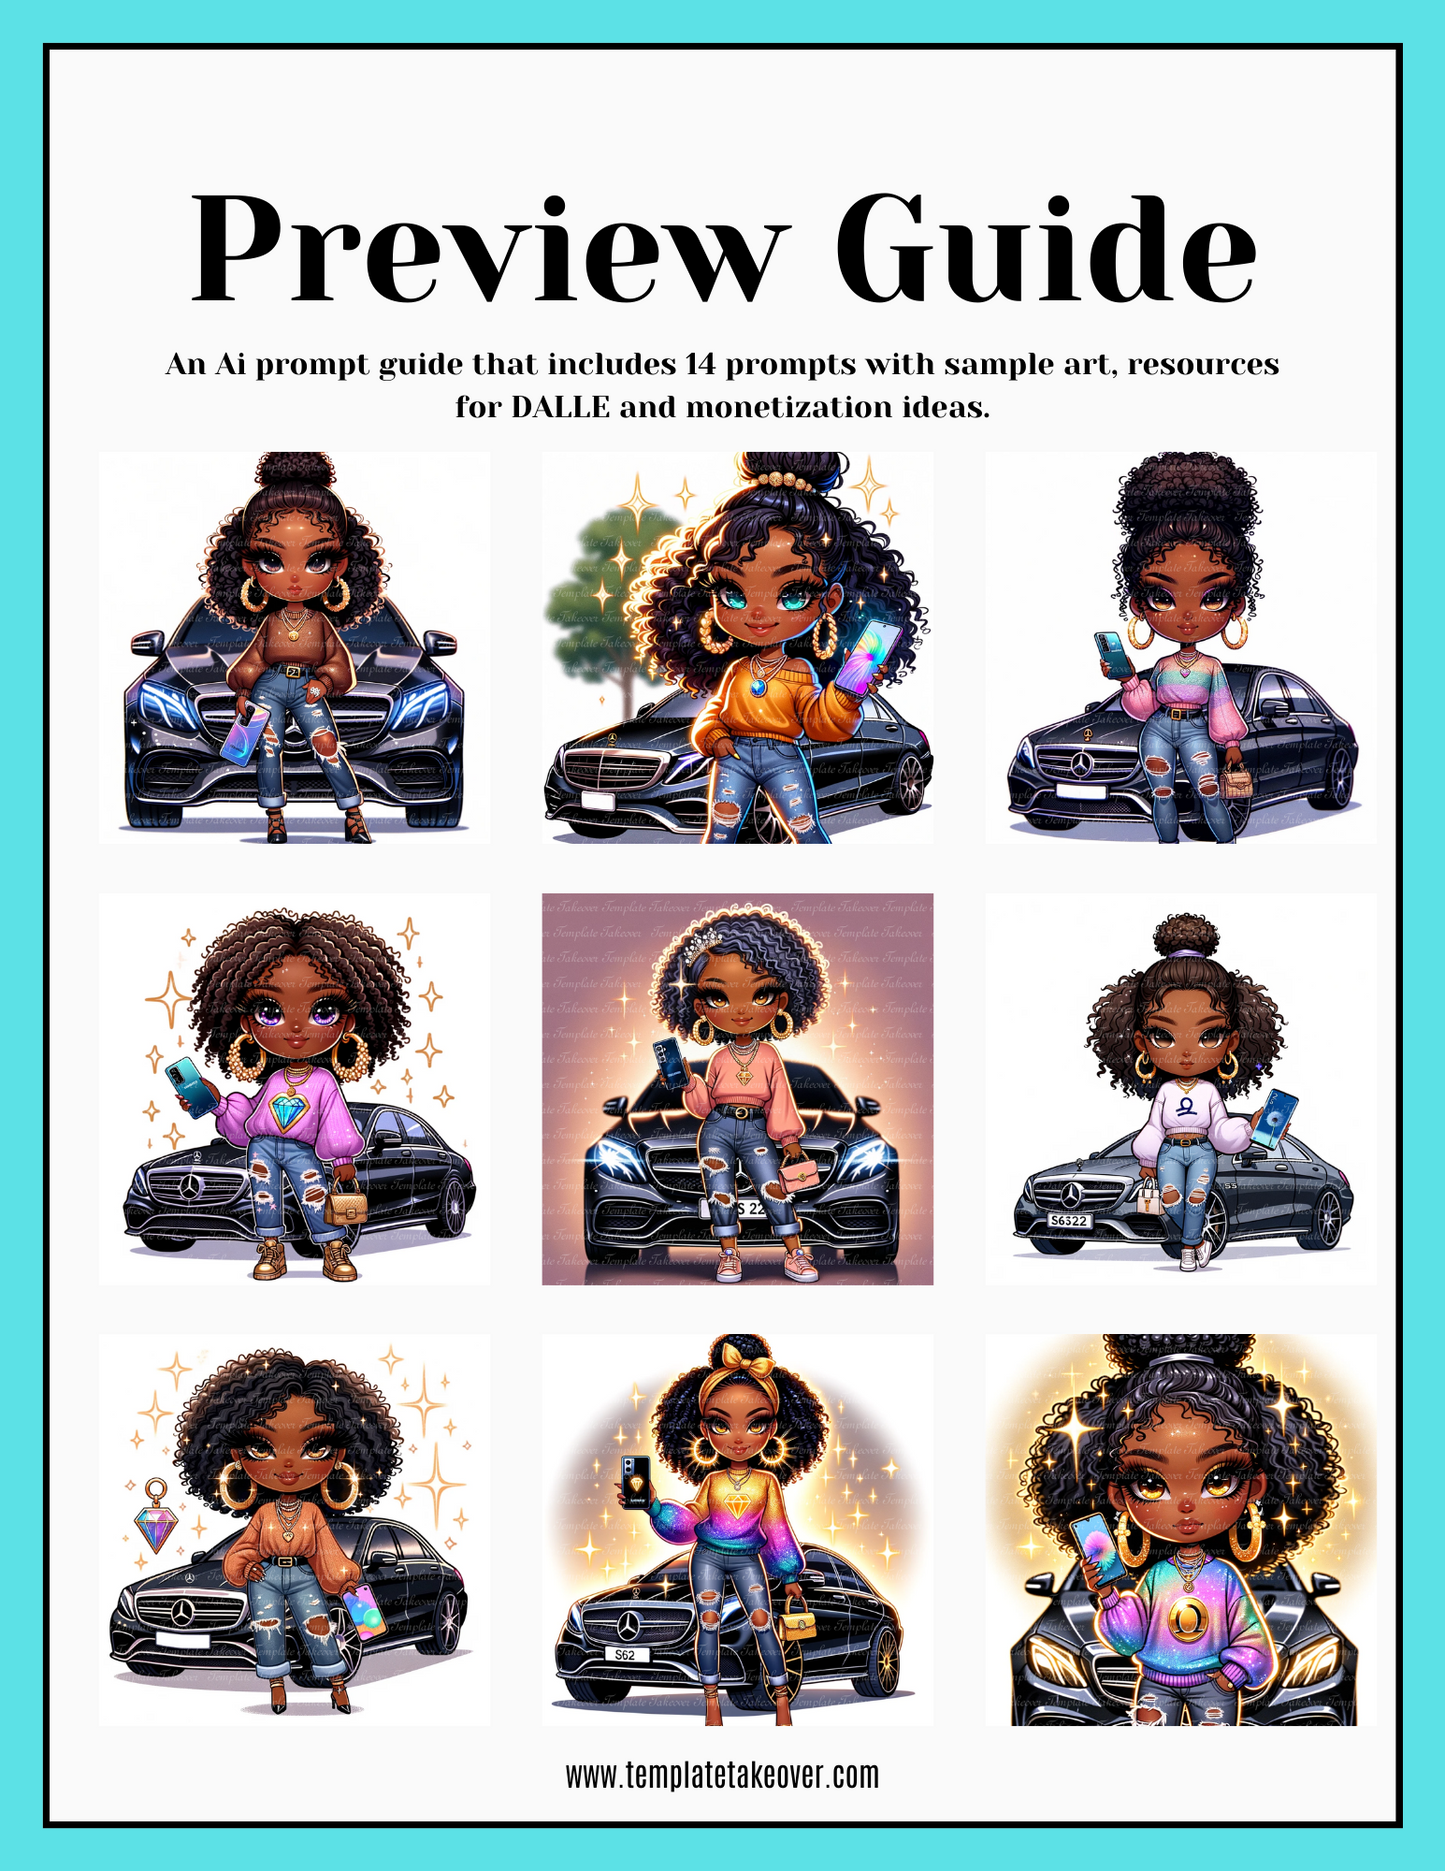 Chibi Zodiac | CHATGPT4 | DALL E 3 | BUNDLE | Prompts | Stickers | African American | Midjourney |  | AI Art | Open Ai | Dall-E 3 | Prompt Guide